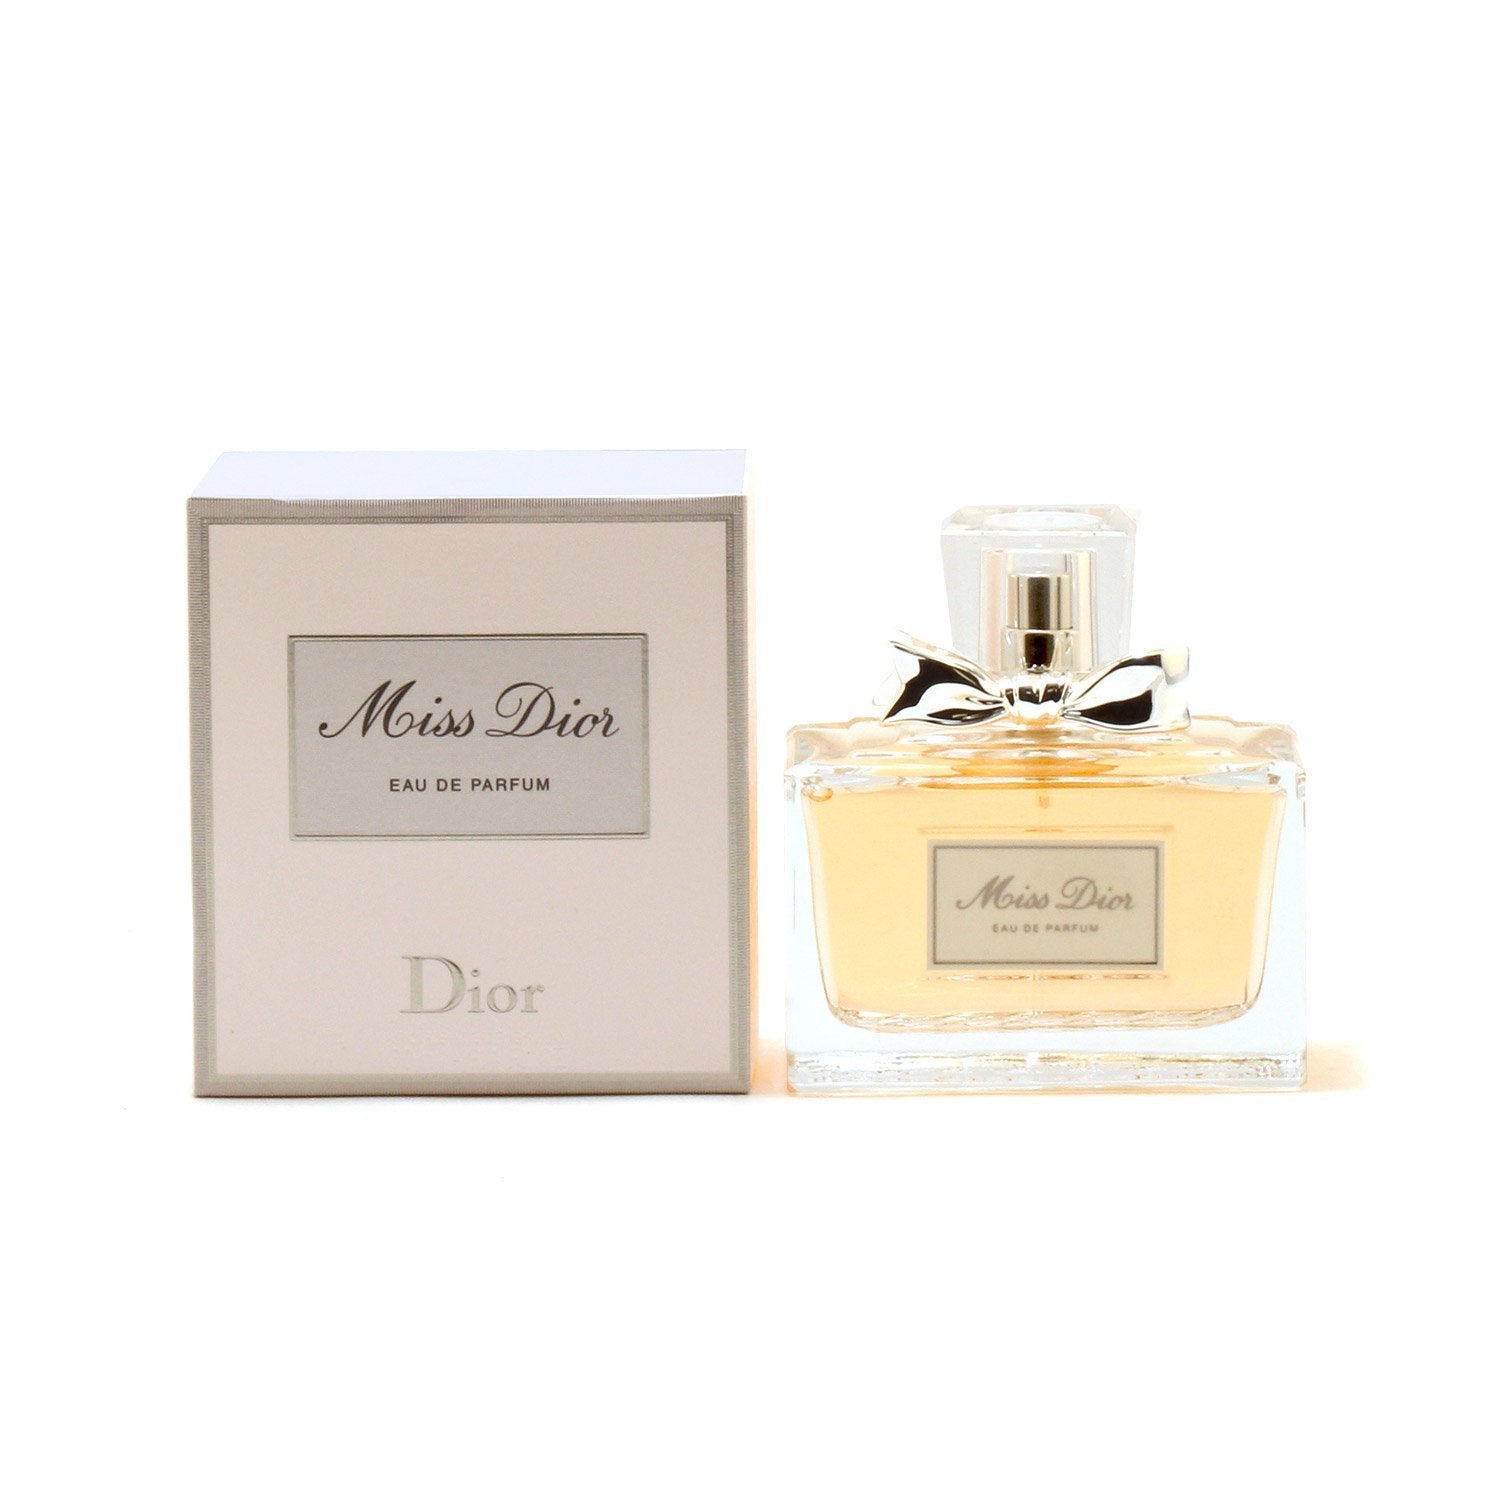 Miss Dior Cherie Perfume by Christian Dior, 3.4 oz Eau De Toilette